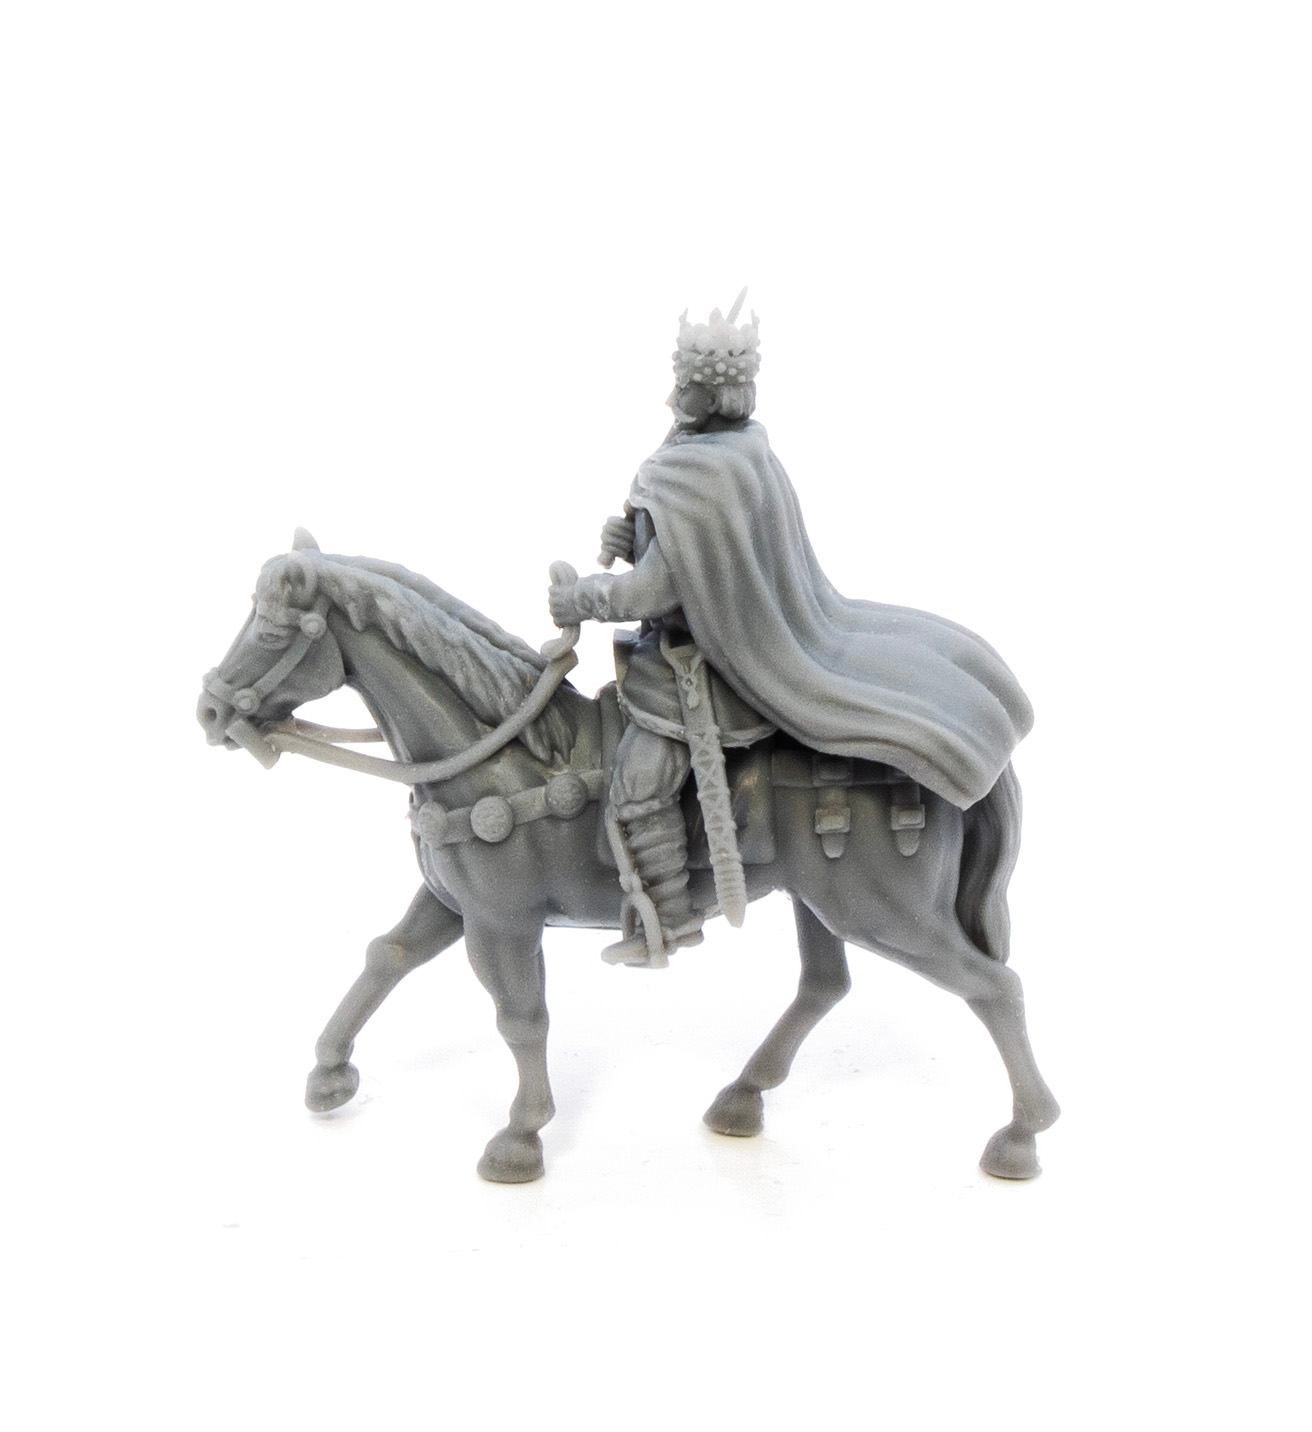 Charlemagne, Emperor of the Carolingian Franks, Mounted